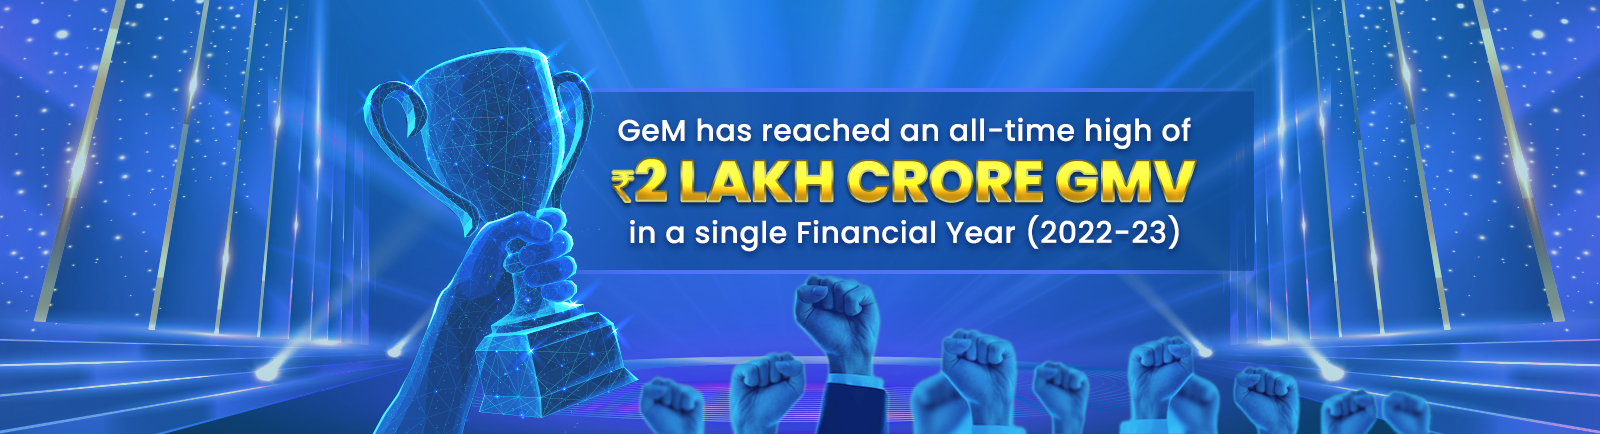 GeM achieved INR 2 Lakh crore GMV in FY 2022-23